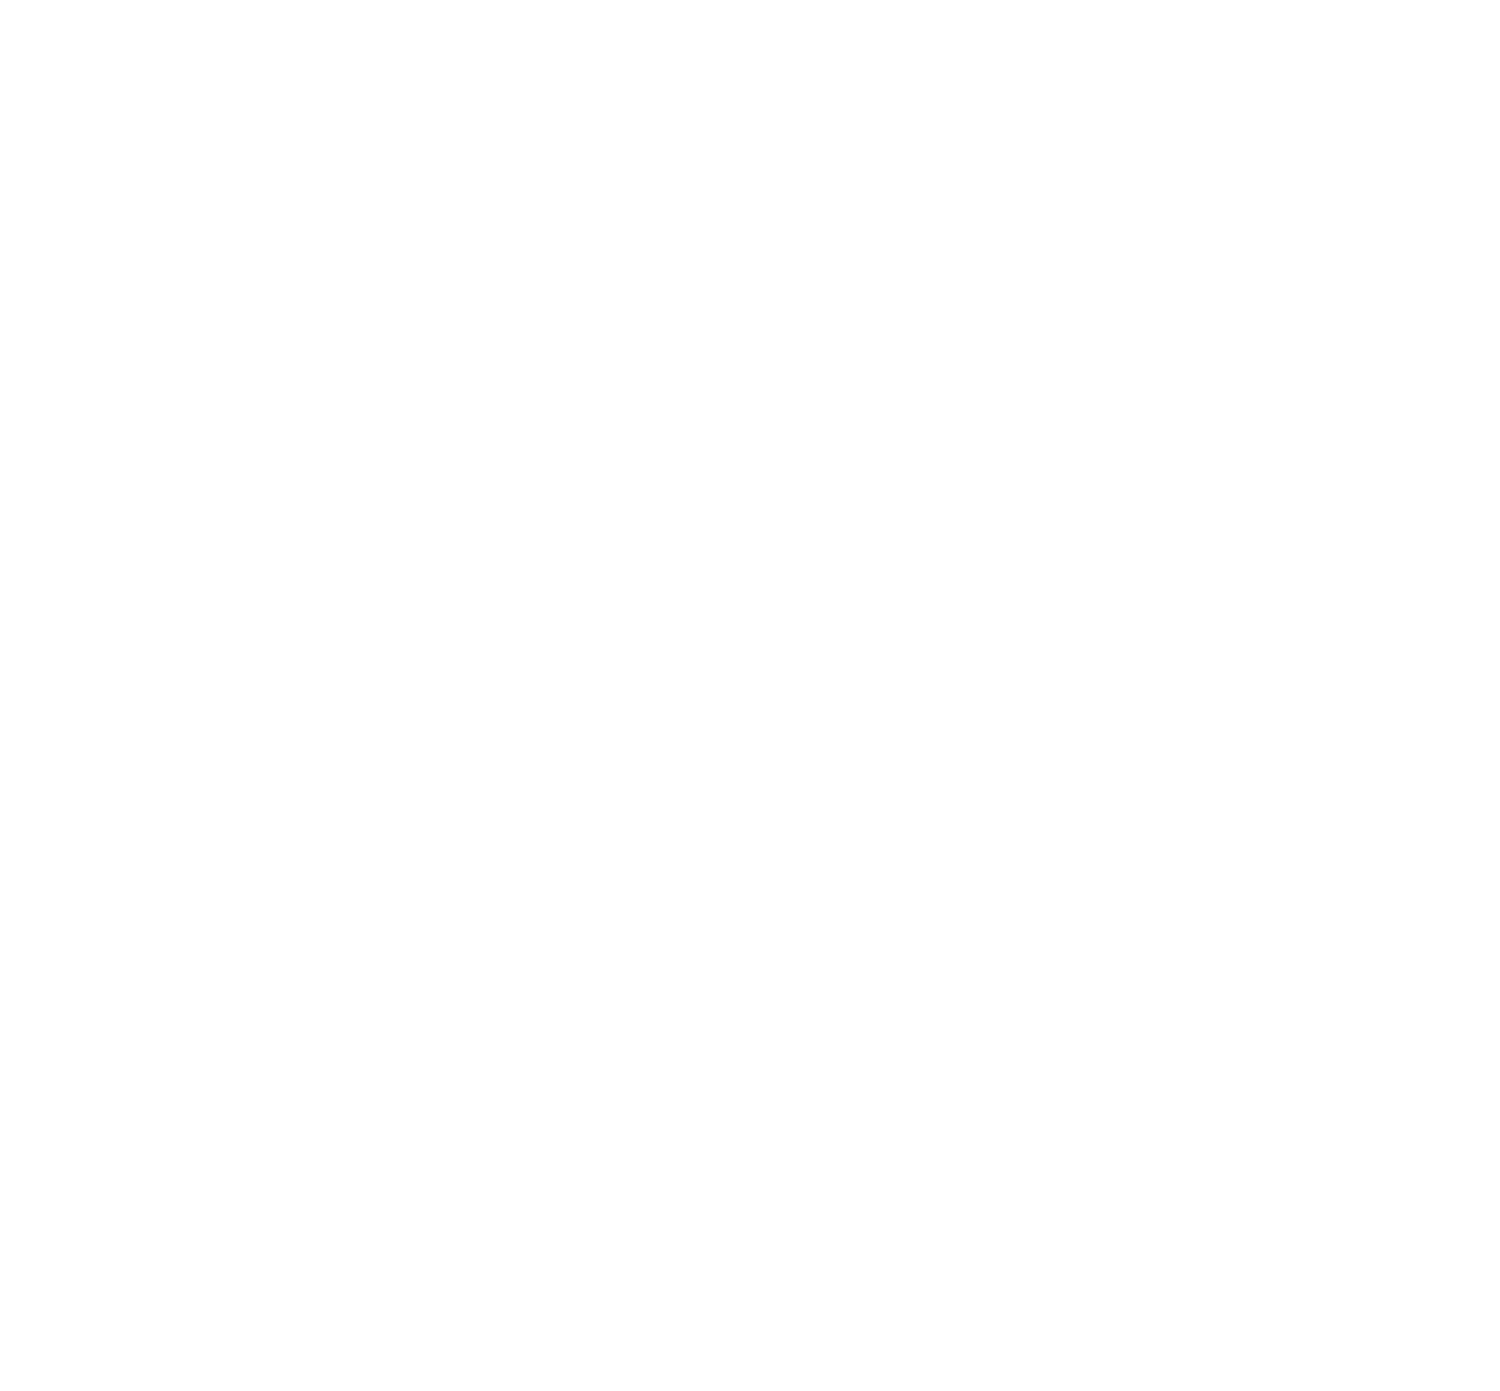 Evergreen Lodge